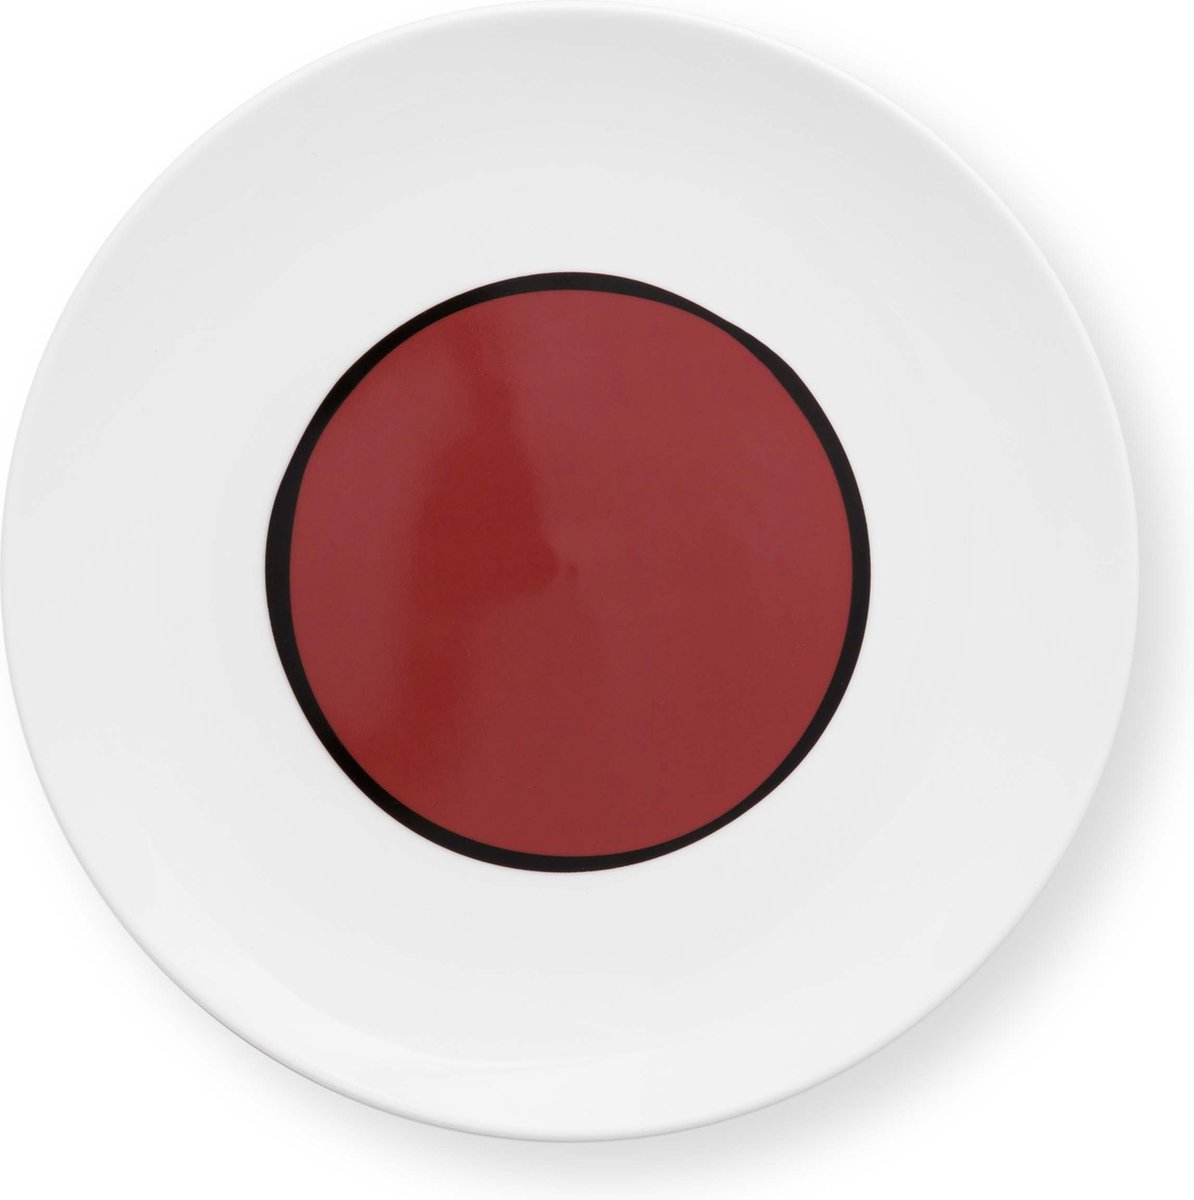 VT Wonen Circles Earth Red - bord - ⌀ 23cm - porselein - lunchbord - klein dinerbord - rood servies